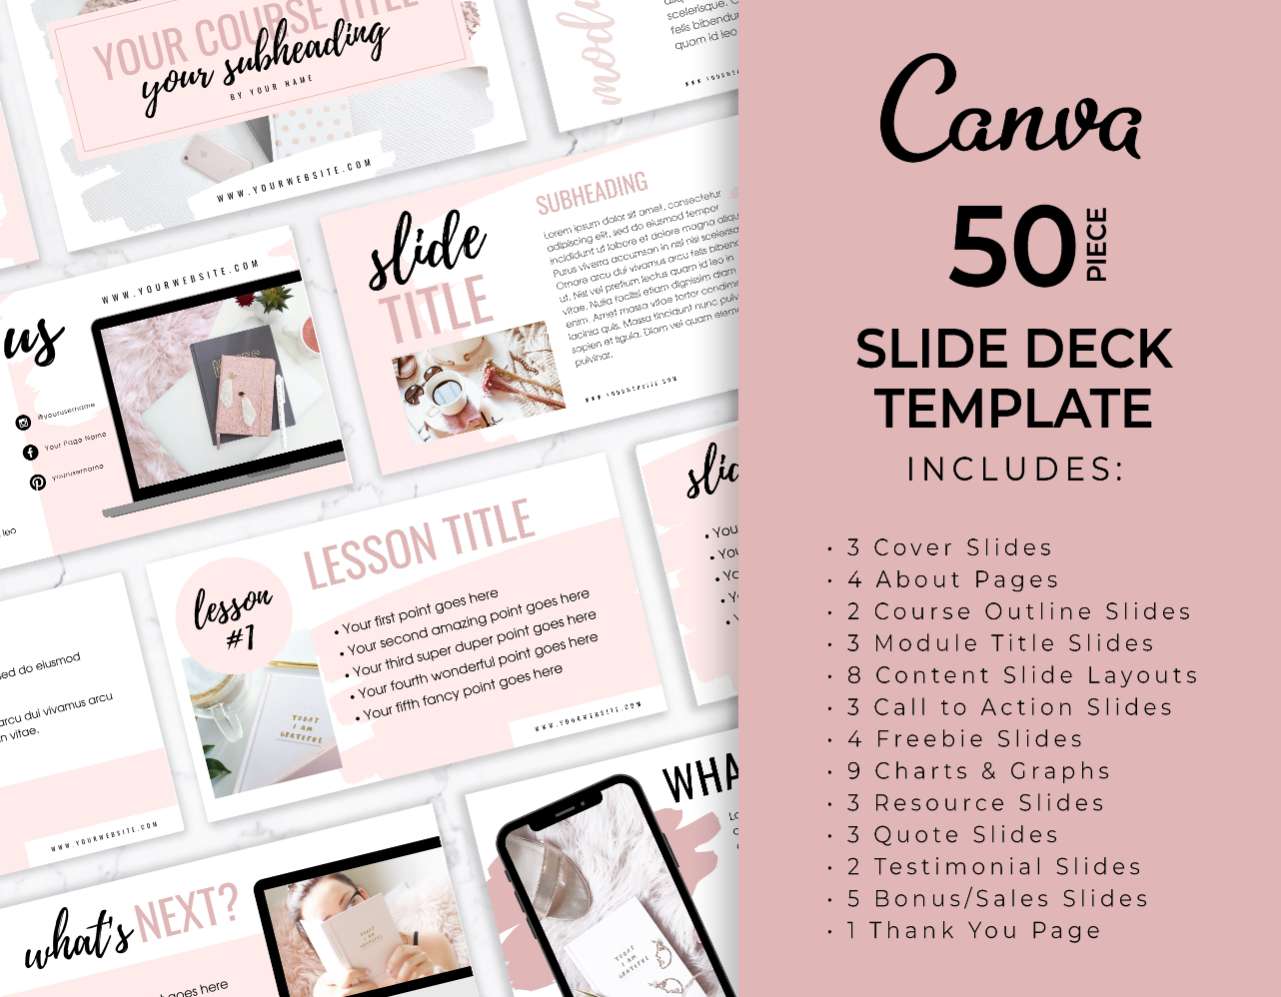 Webinar & Slide Deck for Canva – Blush & Black